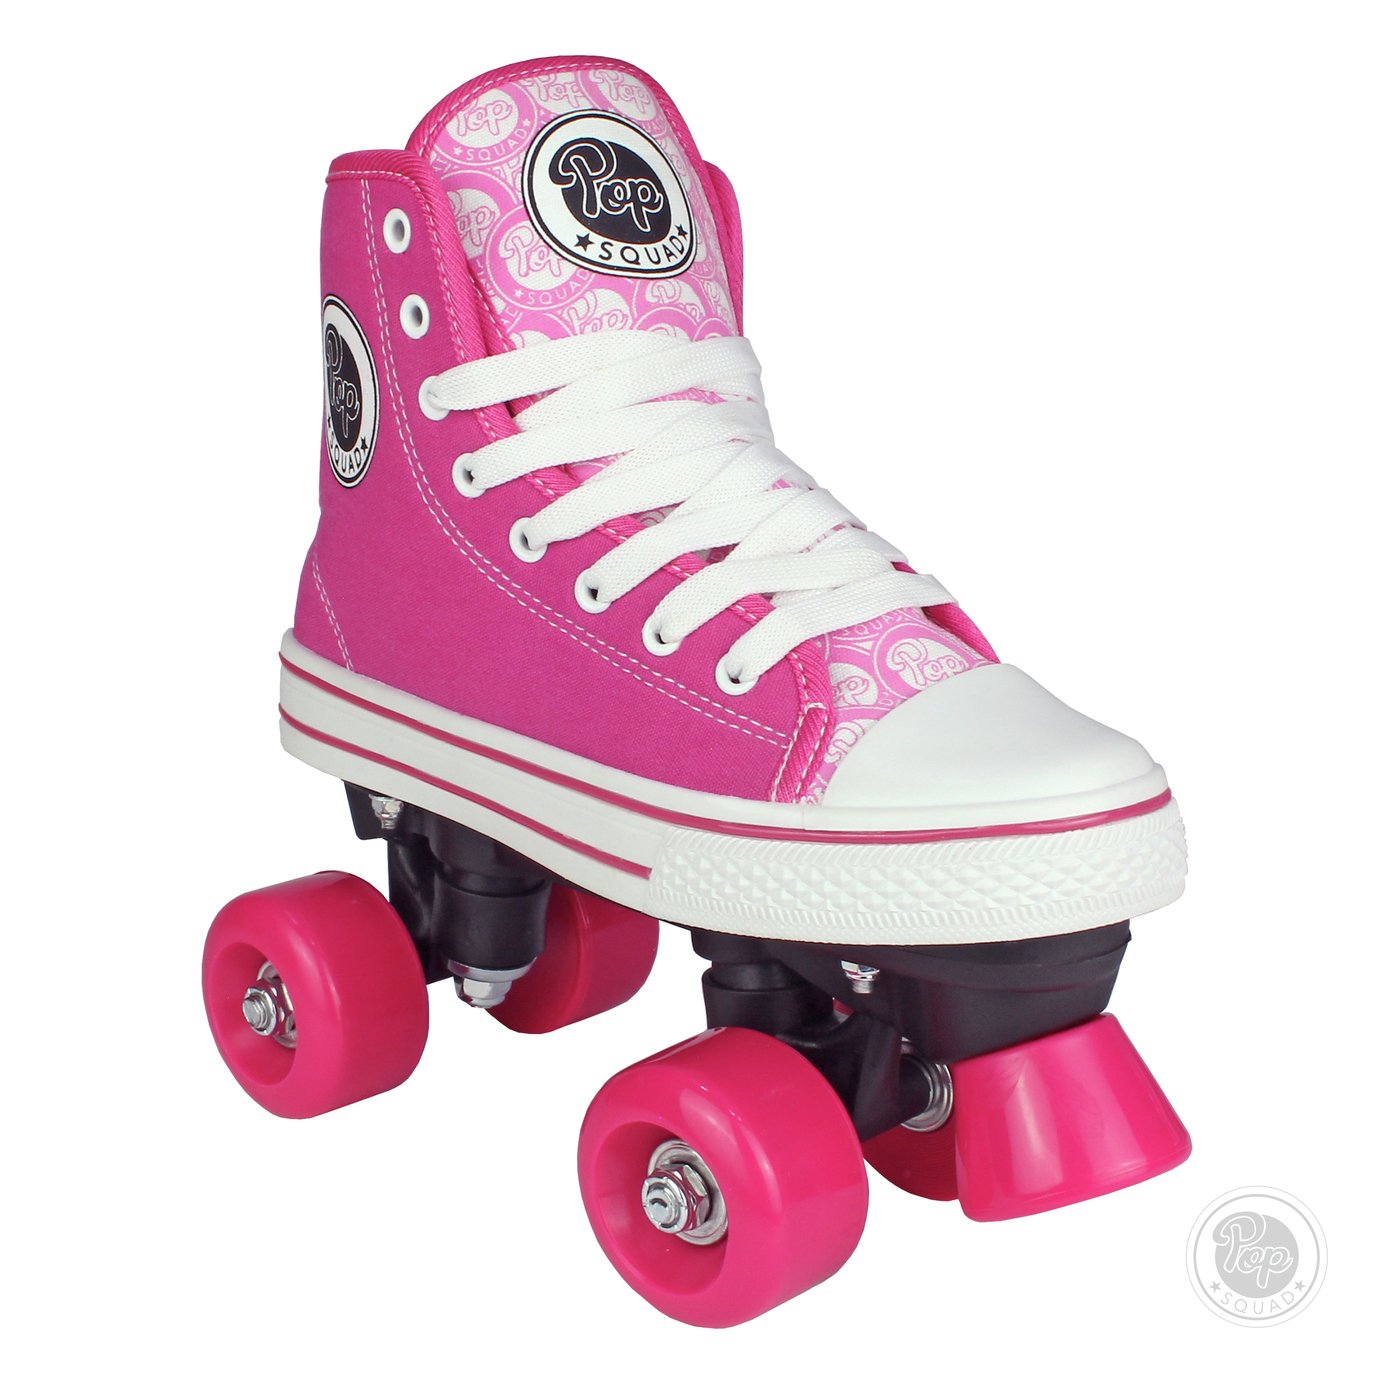 Pop Squad Pink Midtown Quad Skate - Size 6